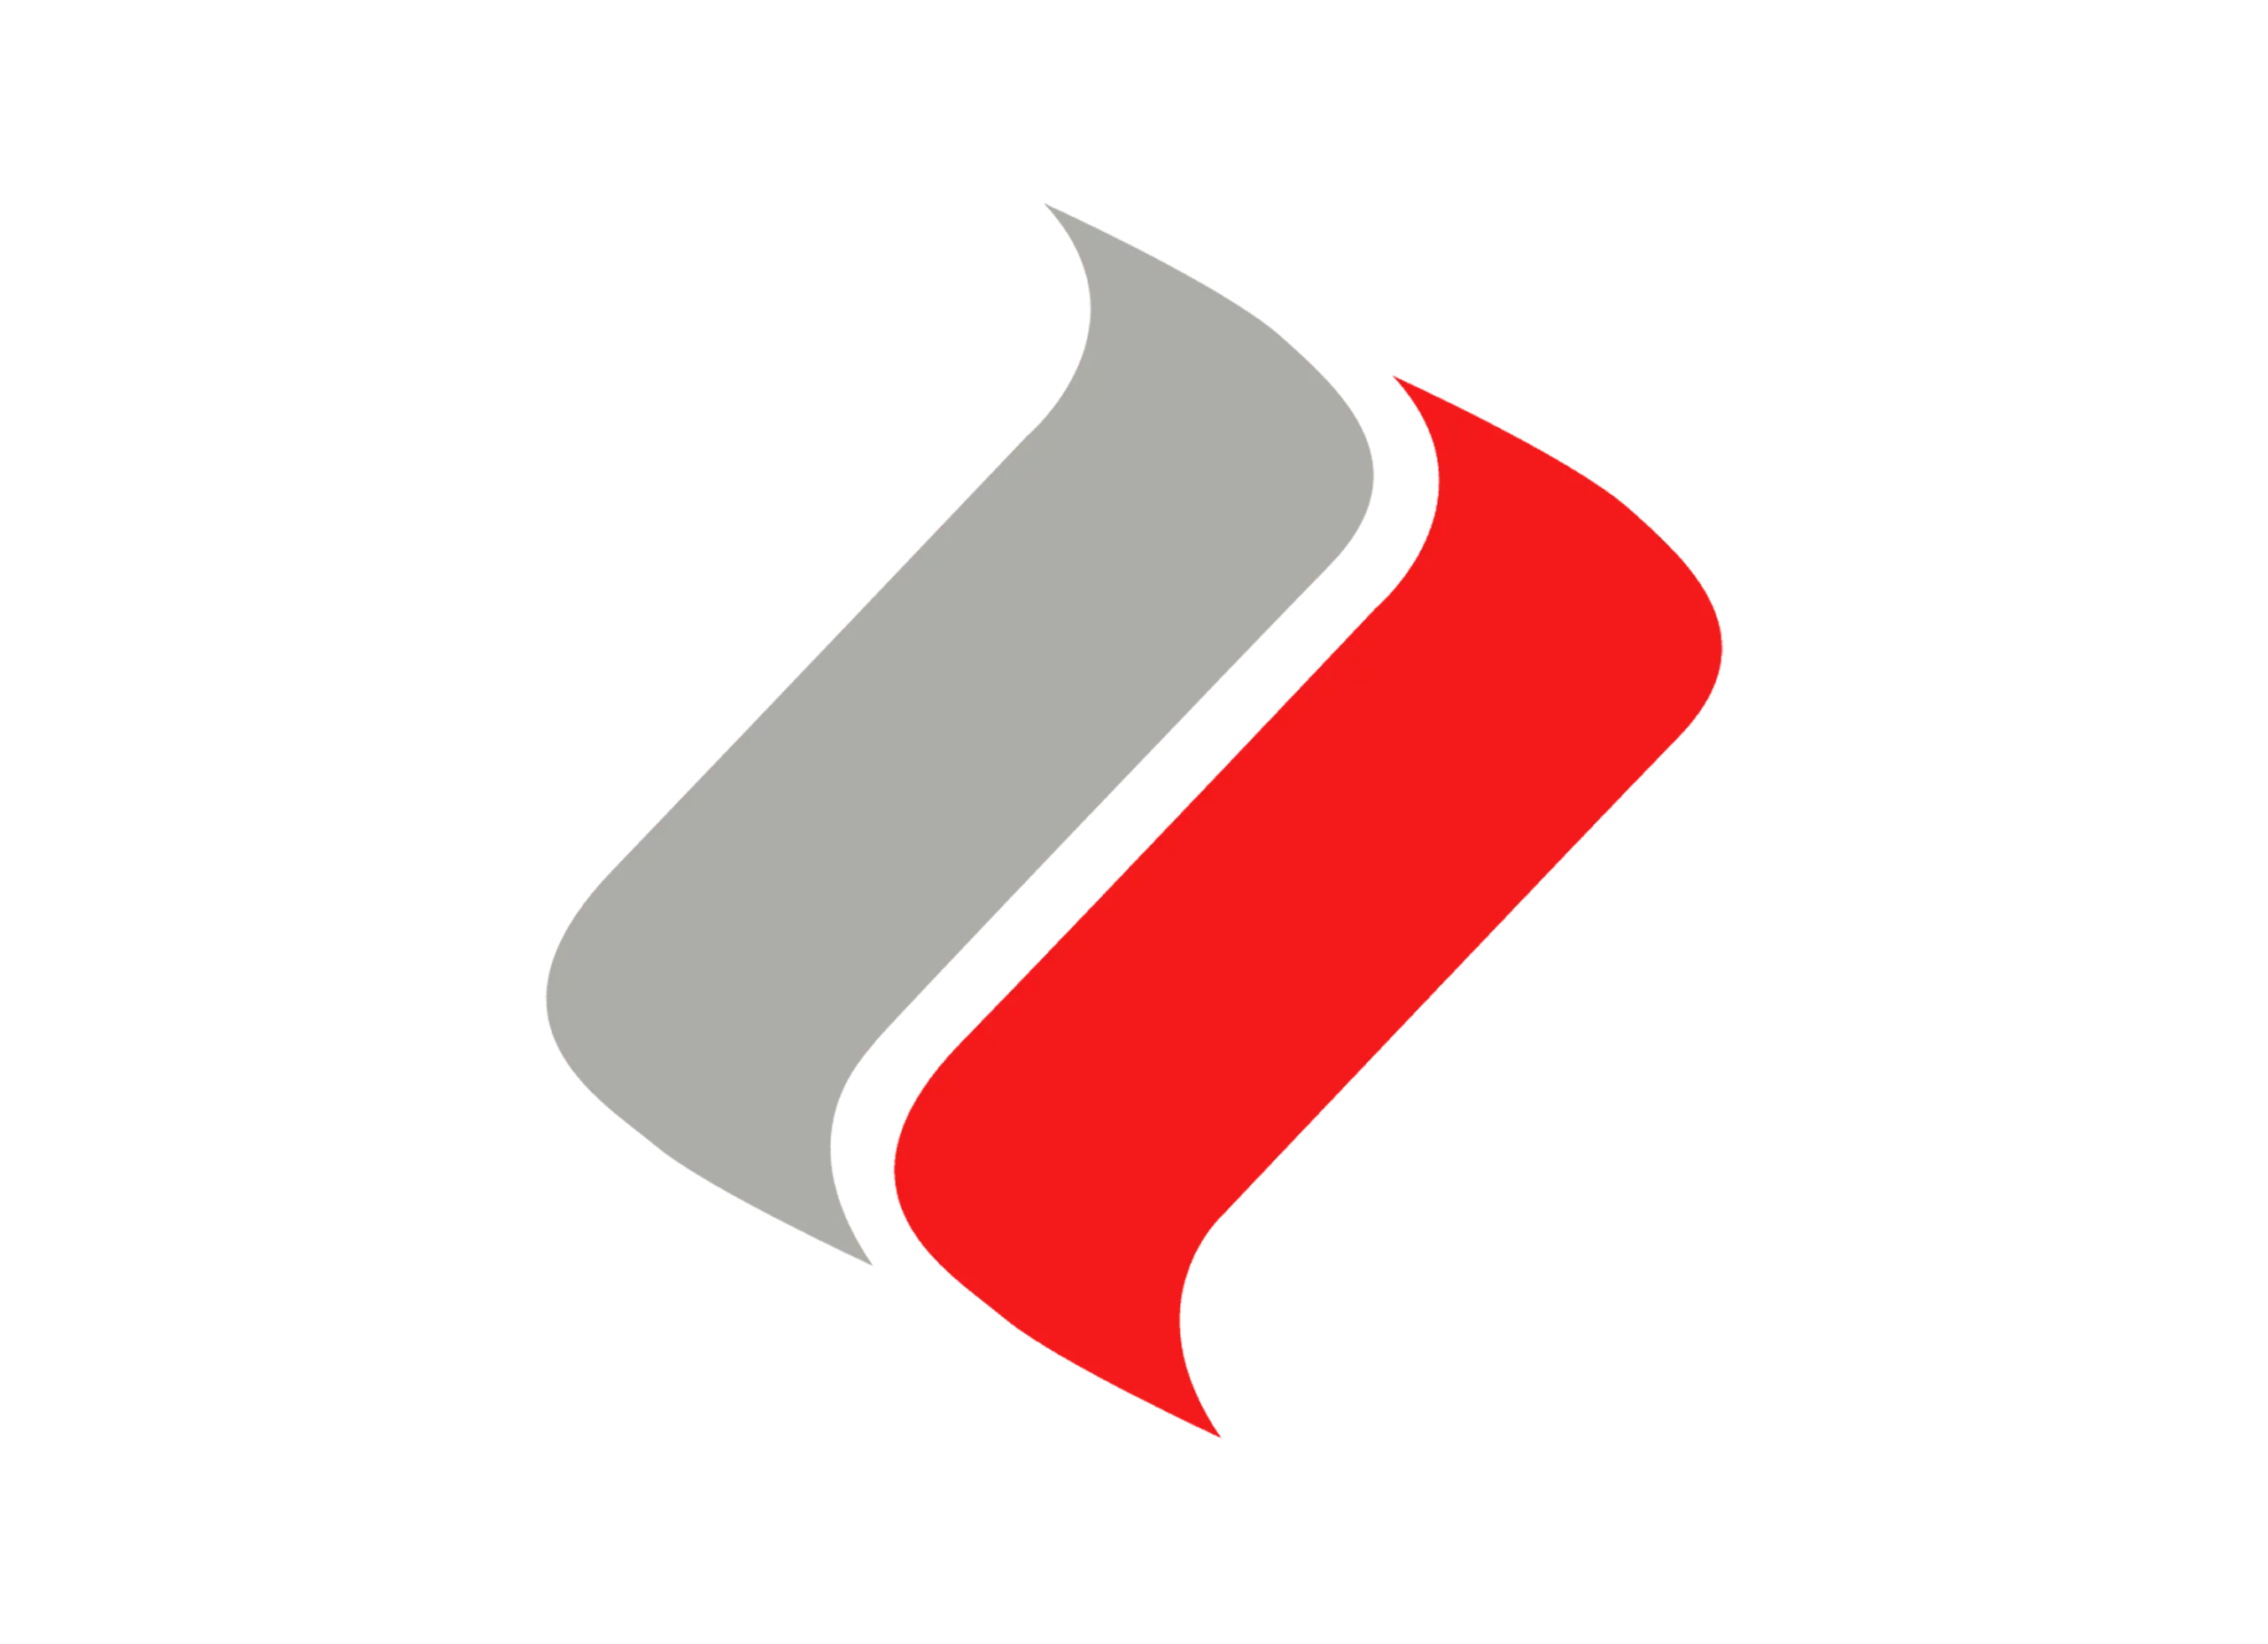 Ascari logo